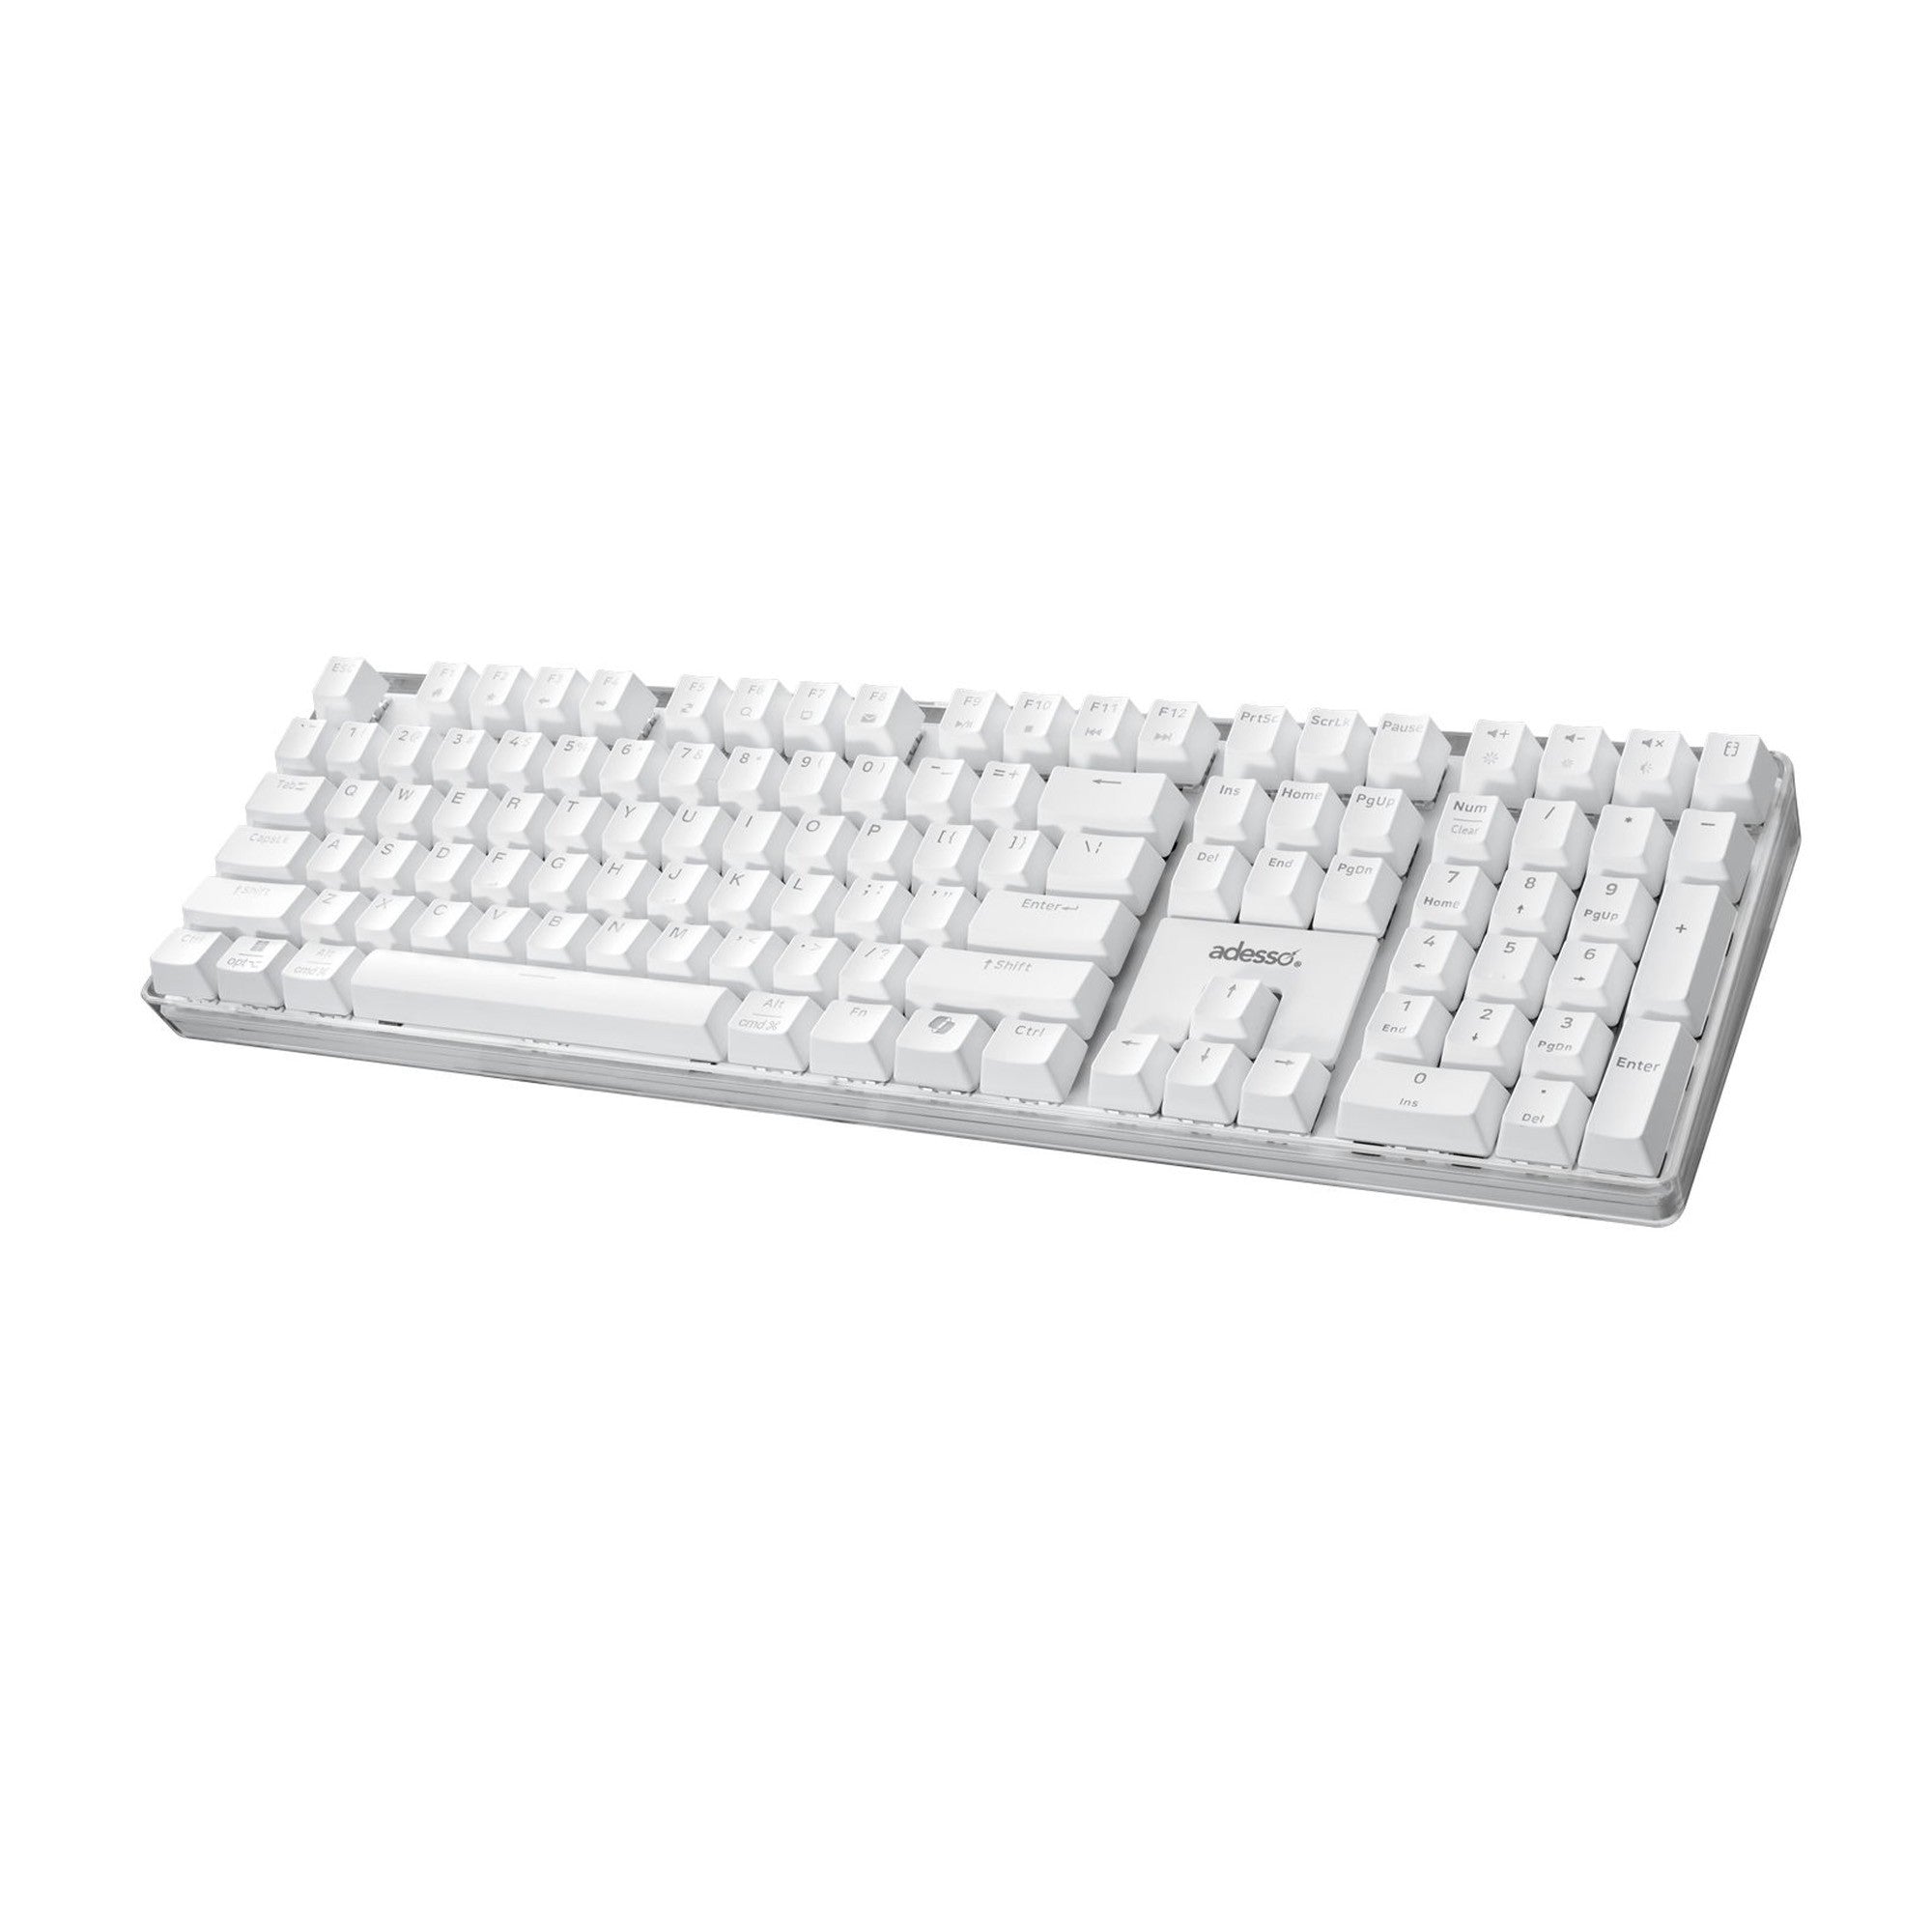 Adesso Multi OS Illuminated Desktop Mechanical Keyboard - White - 15-12855